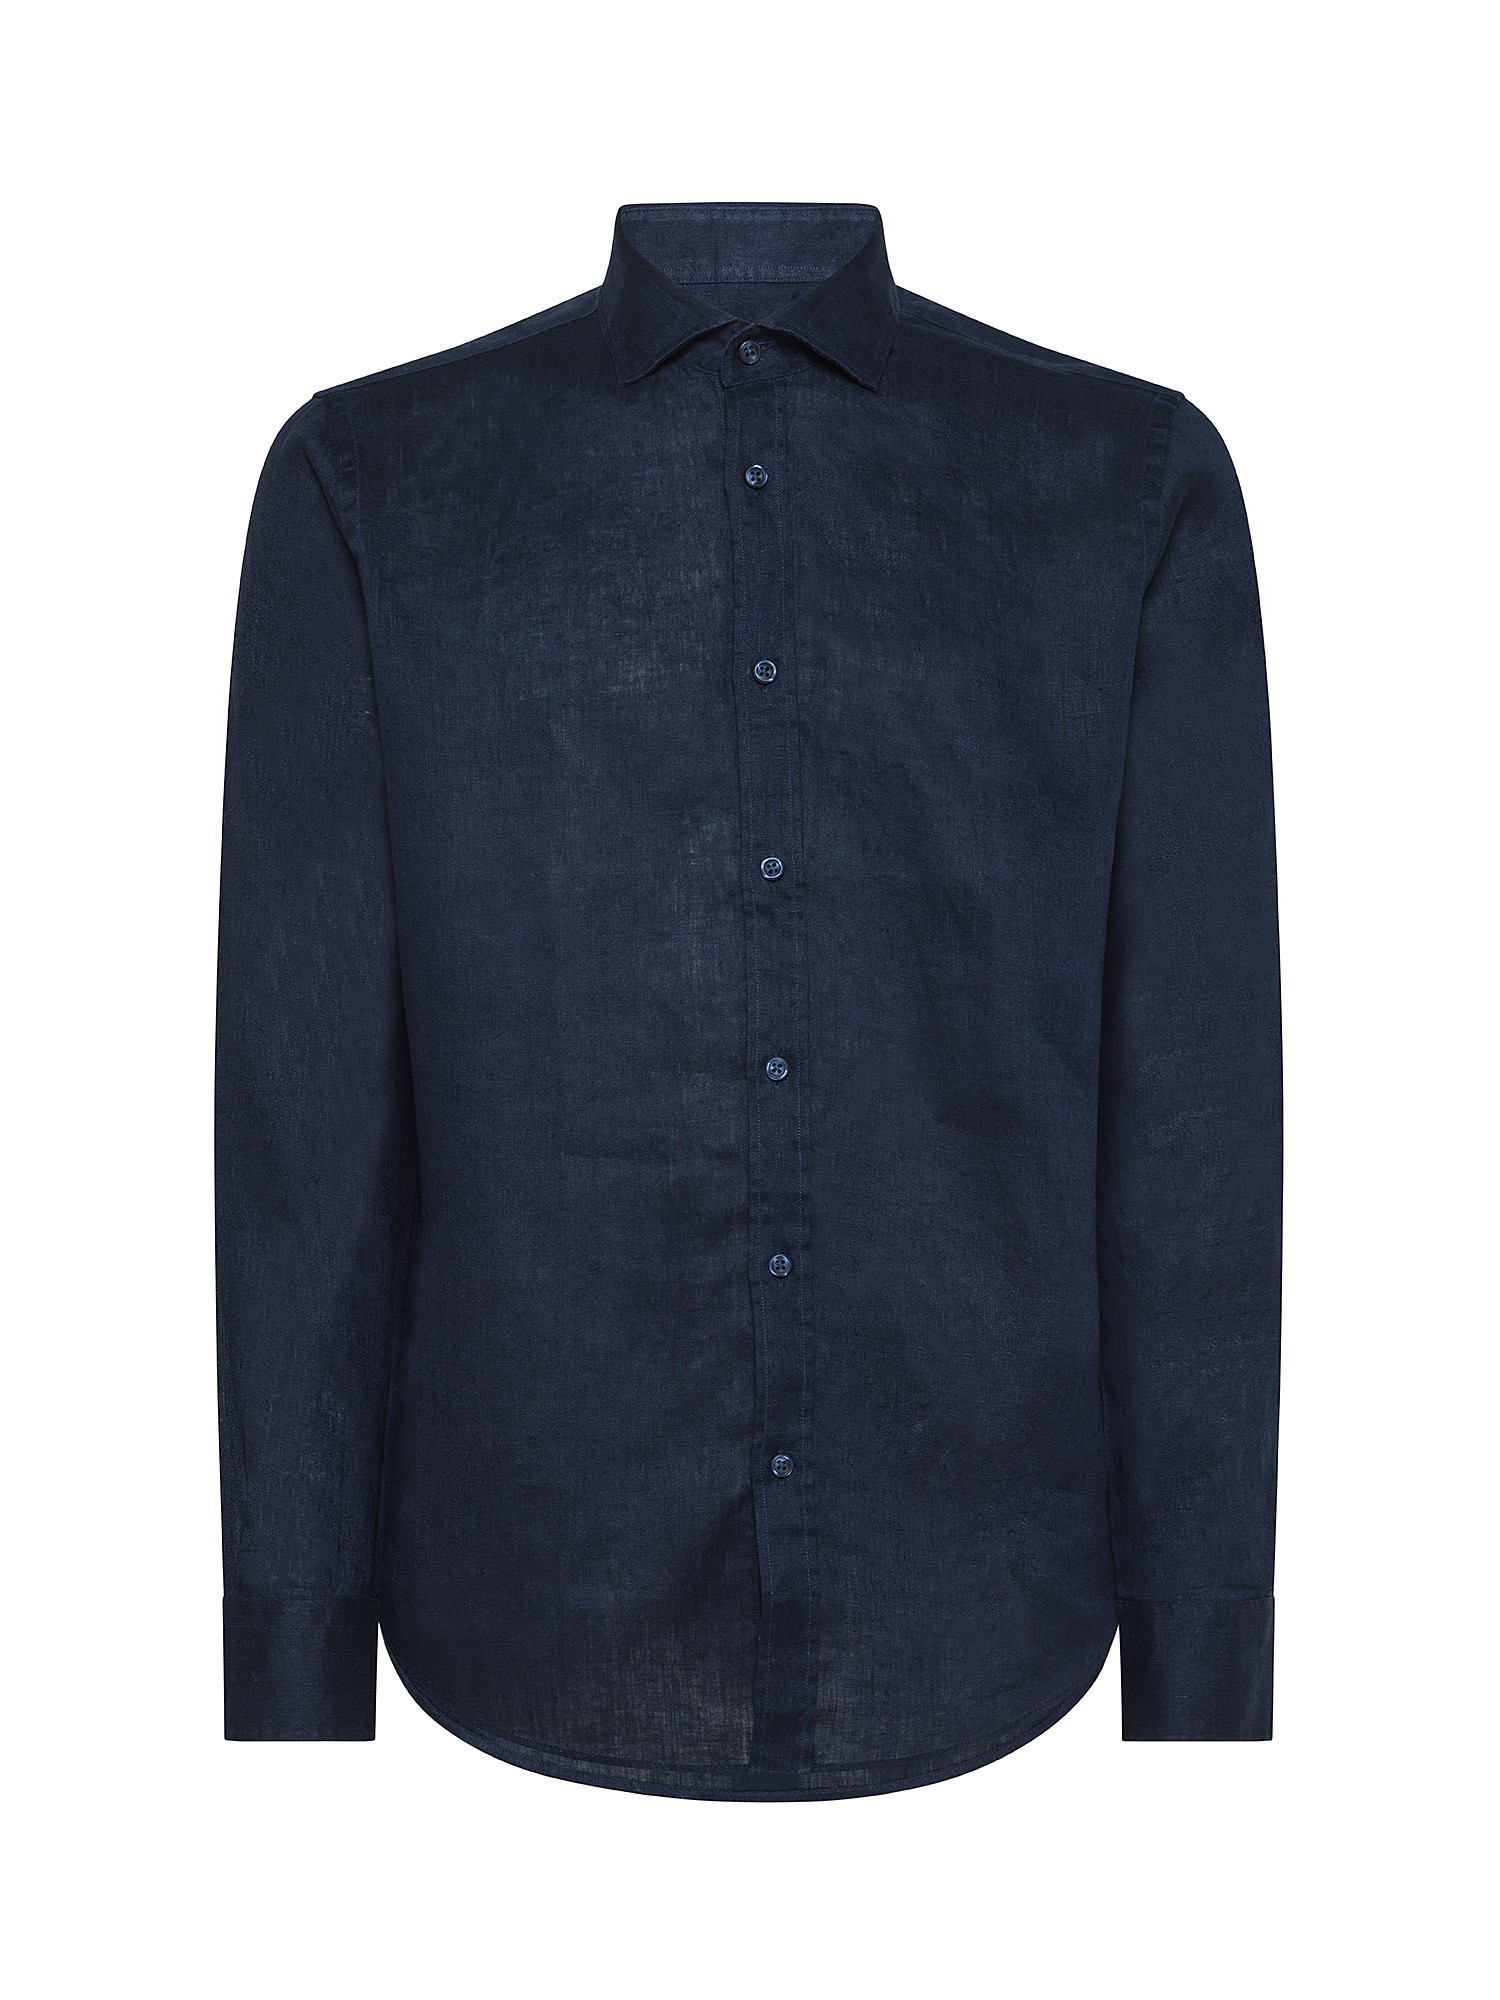 Luca D'Altieri - Camicia tailor fit in puro lino, Blu scuro, large image number 0